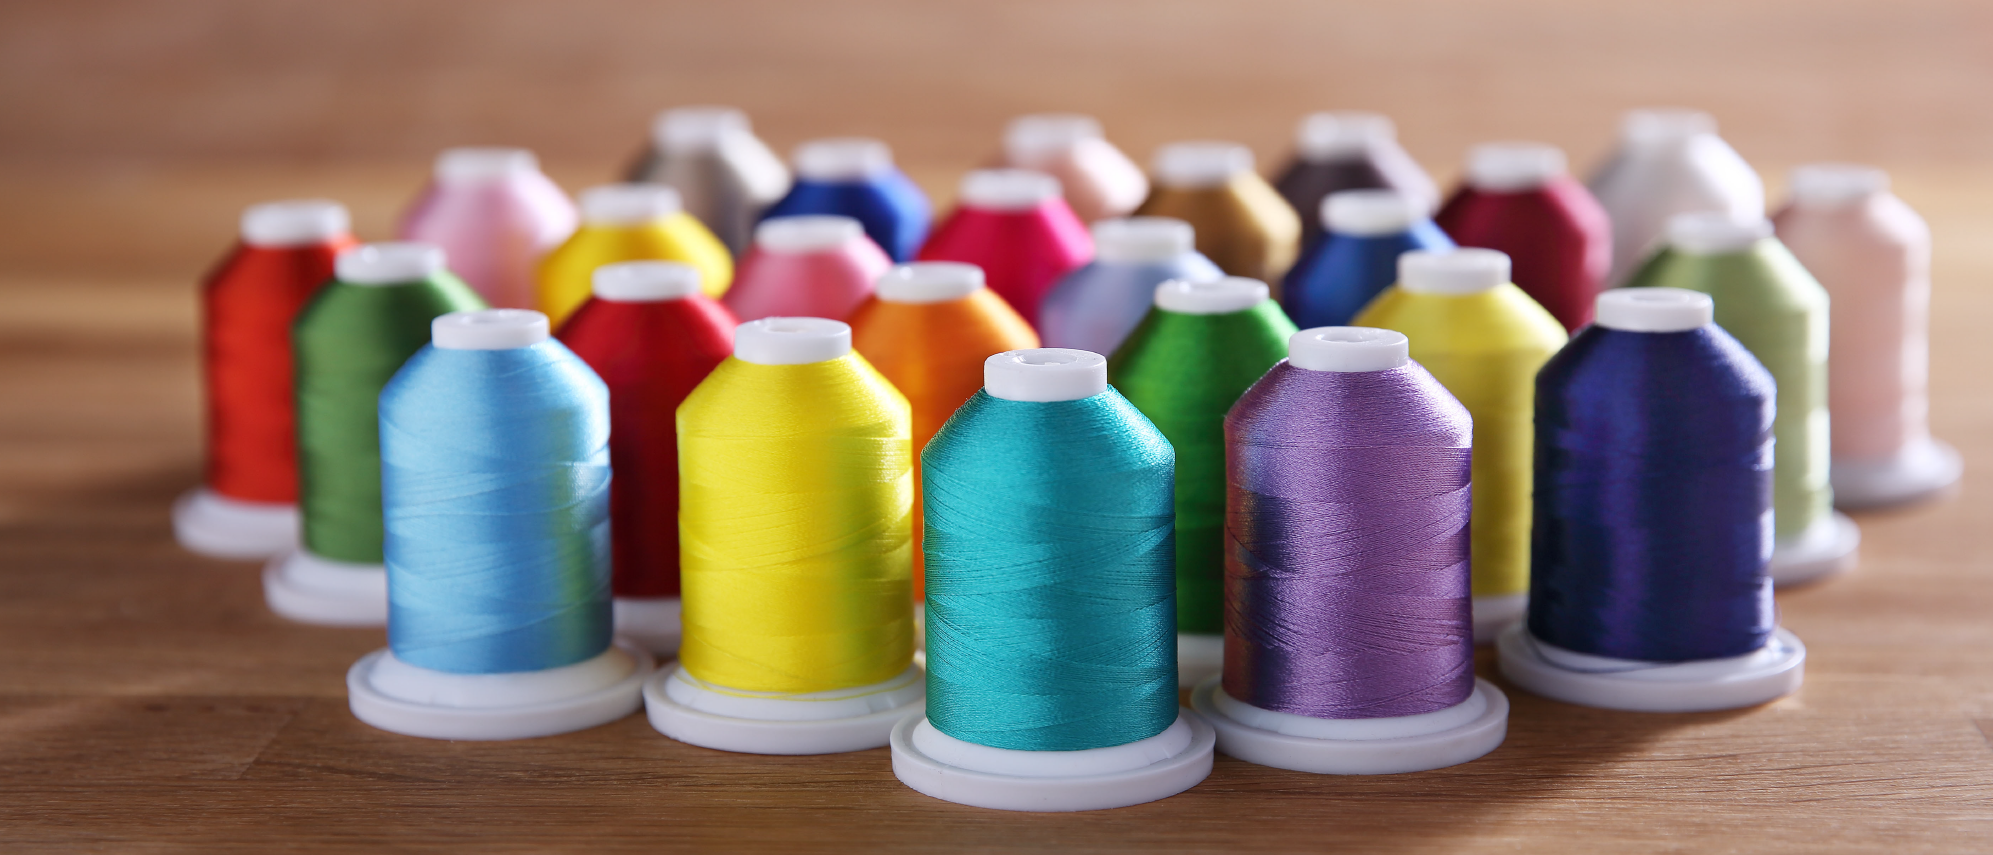 Gutermann Thread, Sew-All Polyester All Purpose Thread, 250m/273yds, Black  250M-010 - Picking Daisies